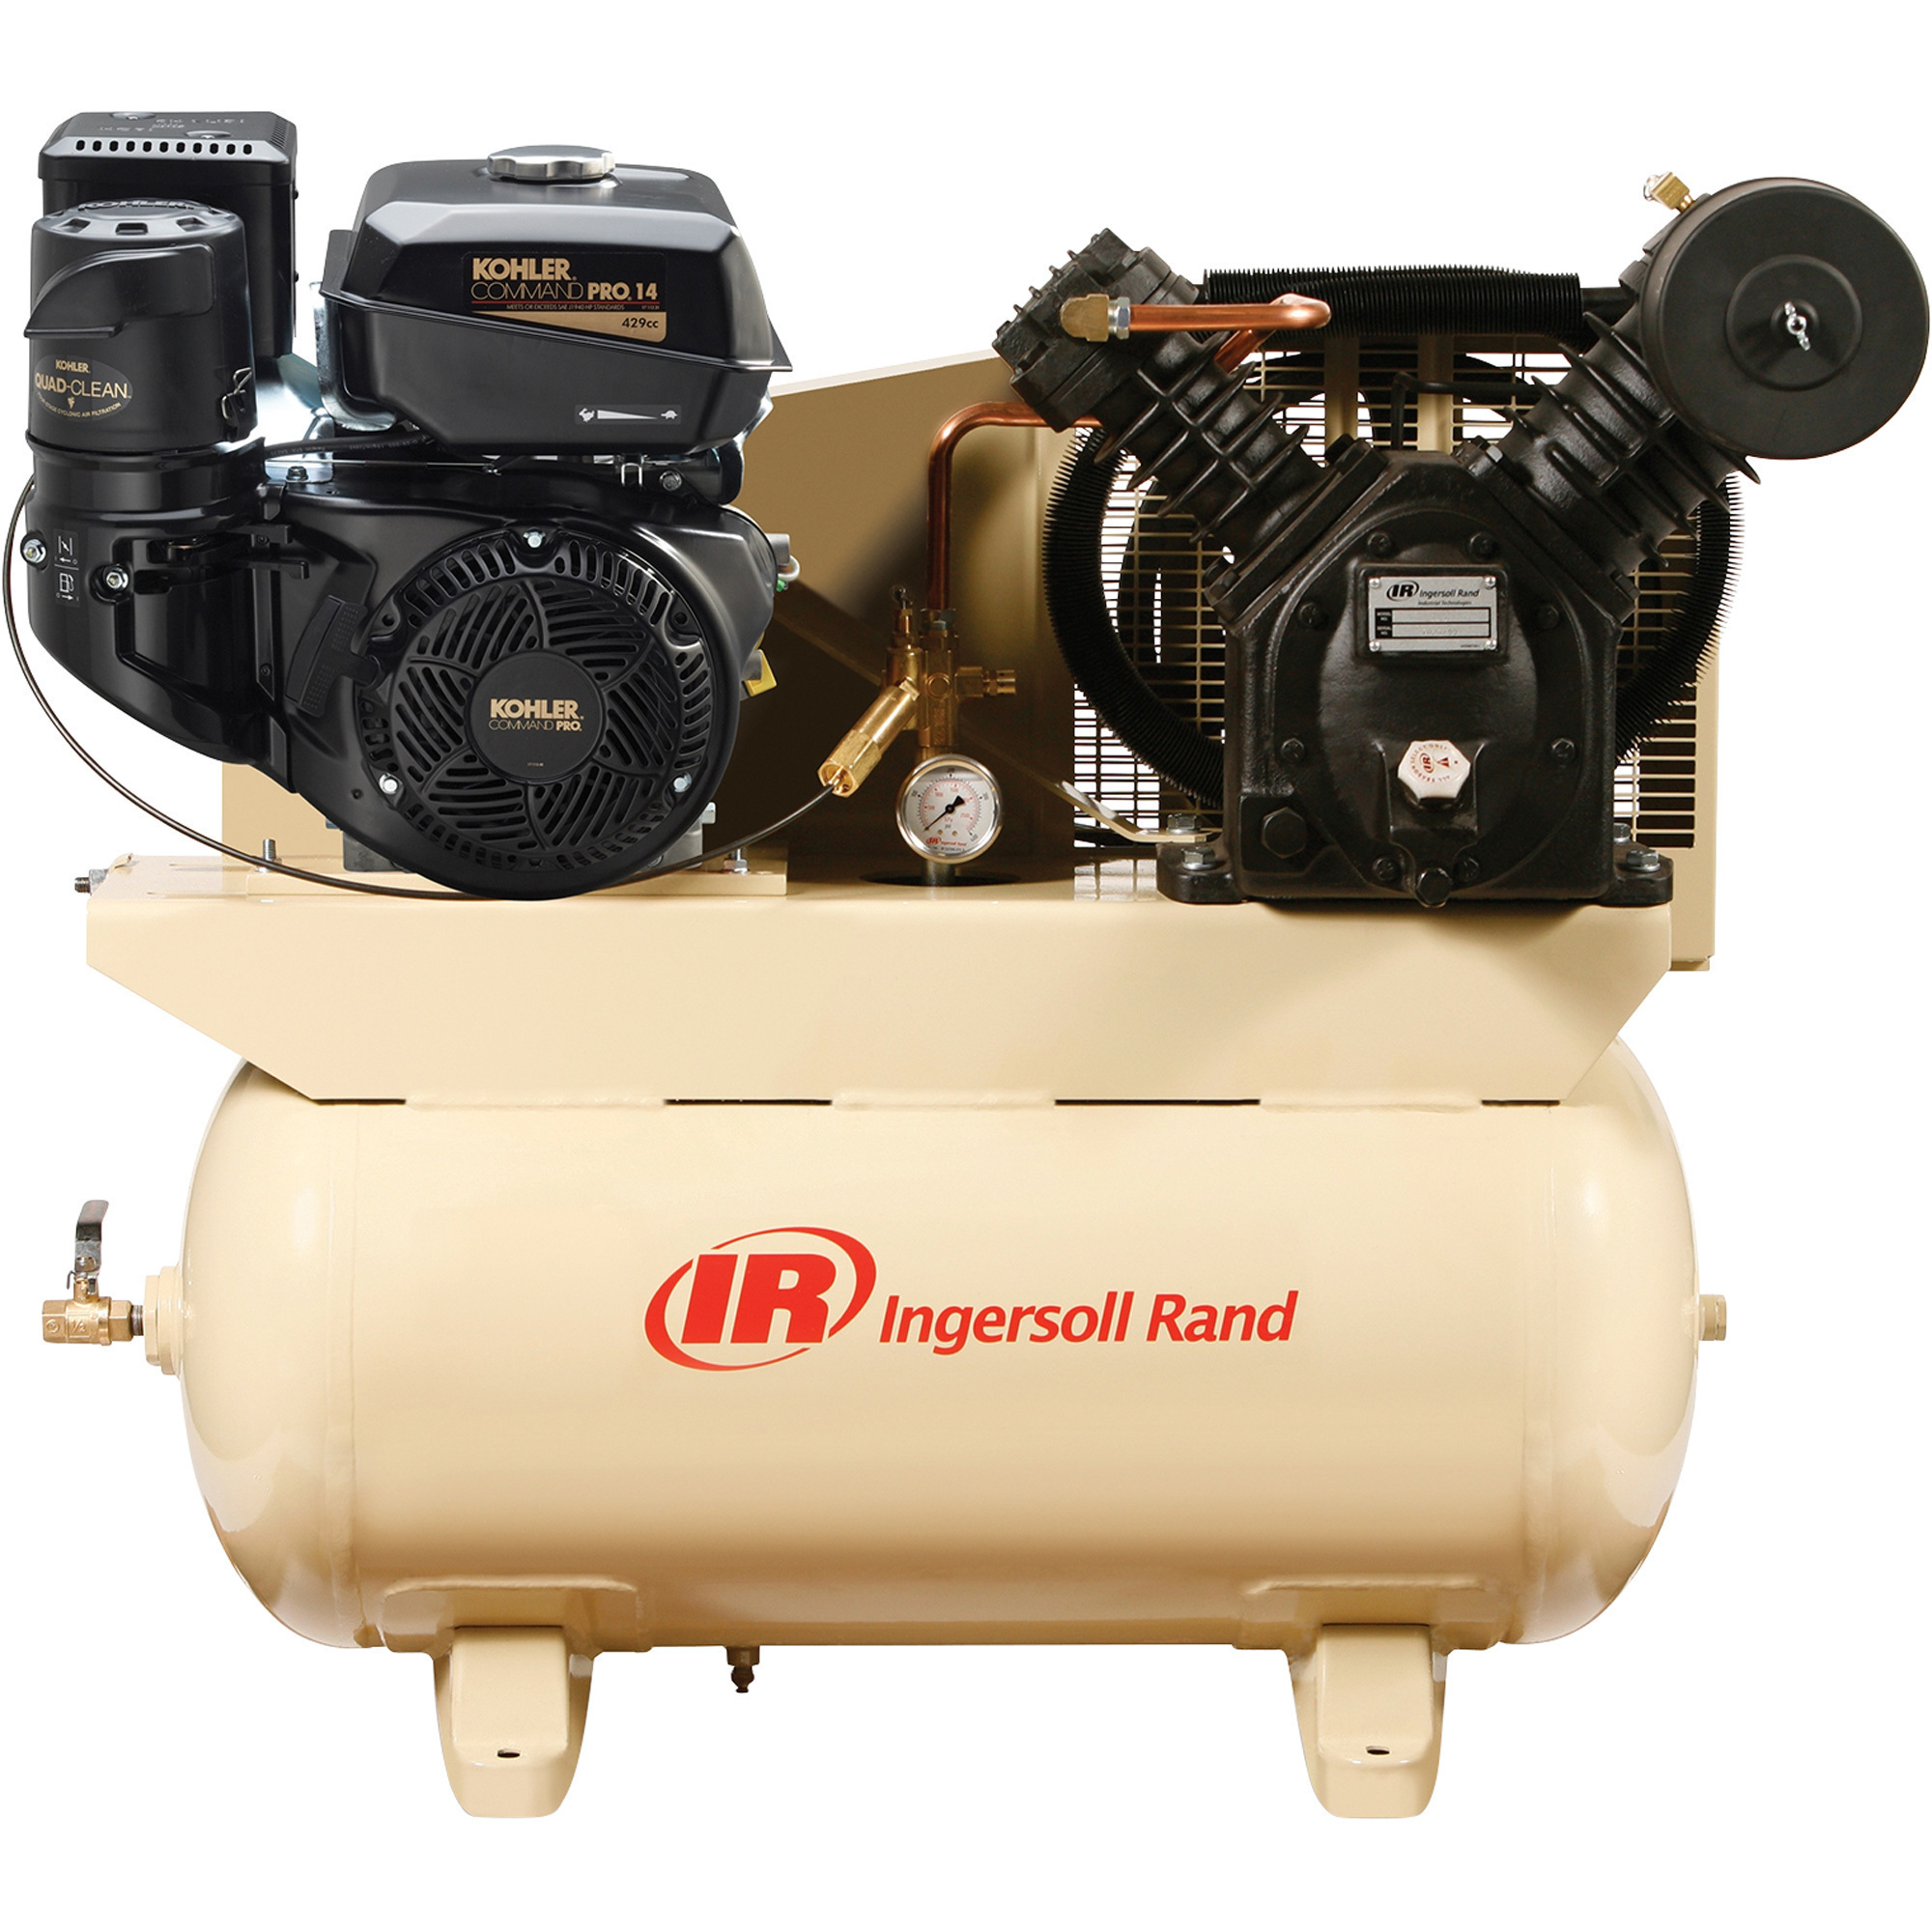 Ingersoll Rand 30-Gallon Gas Air Compressor, 24.3 CFM @ 175 PSI, 14 HP Kohler Engine, Cast Iron, Electric Start, Model 2475